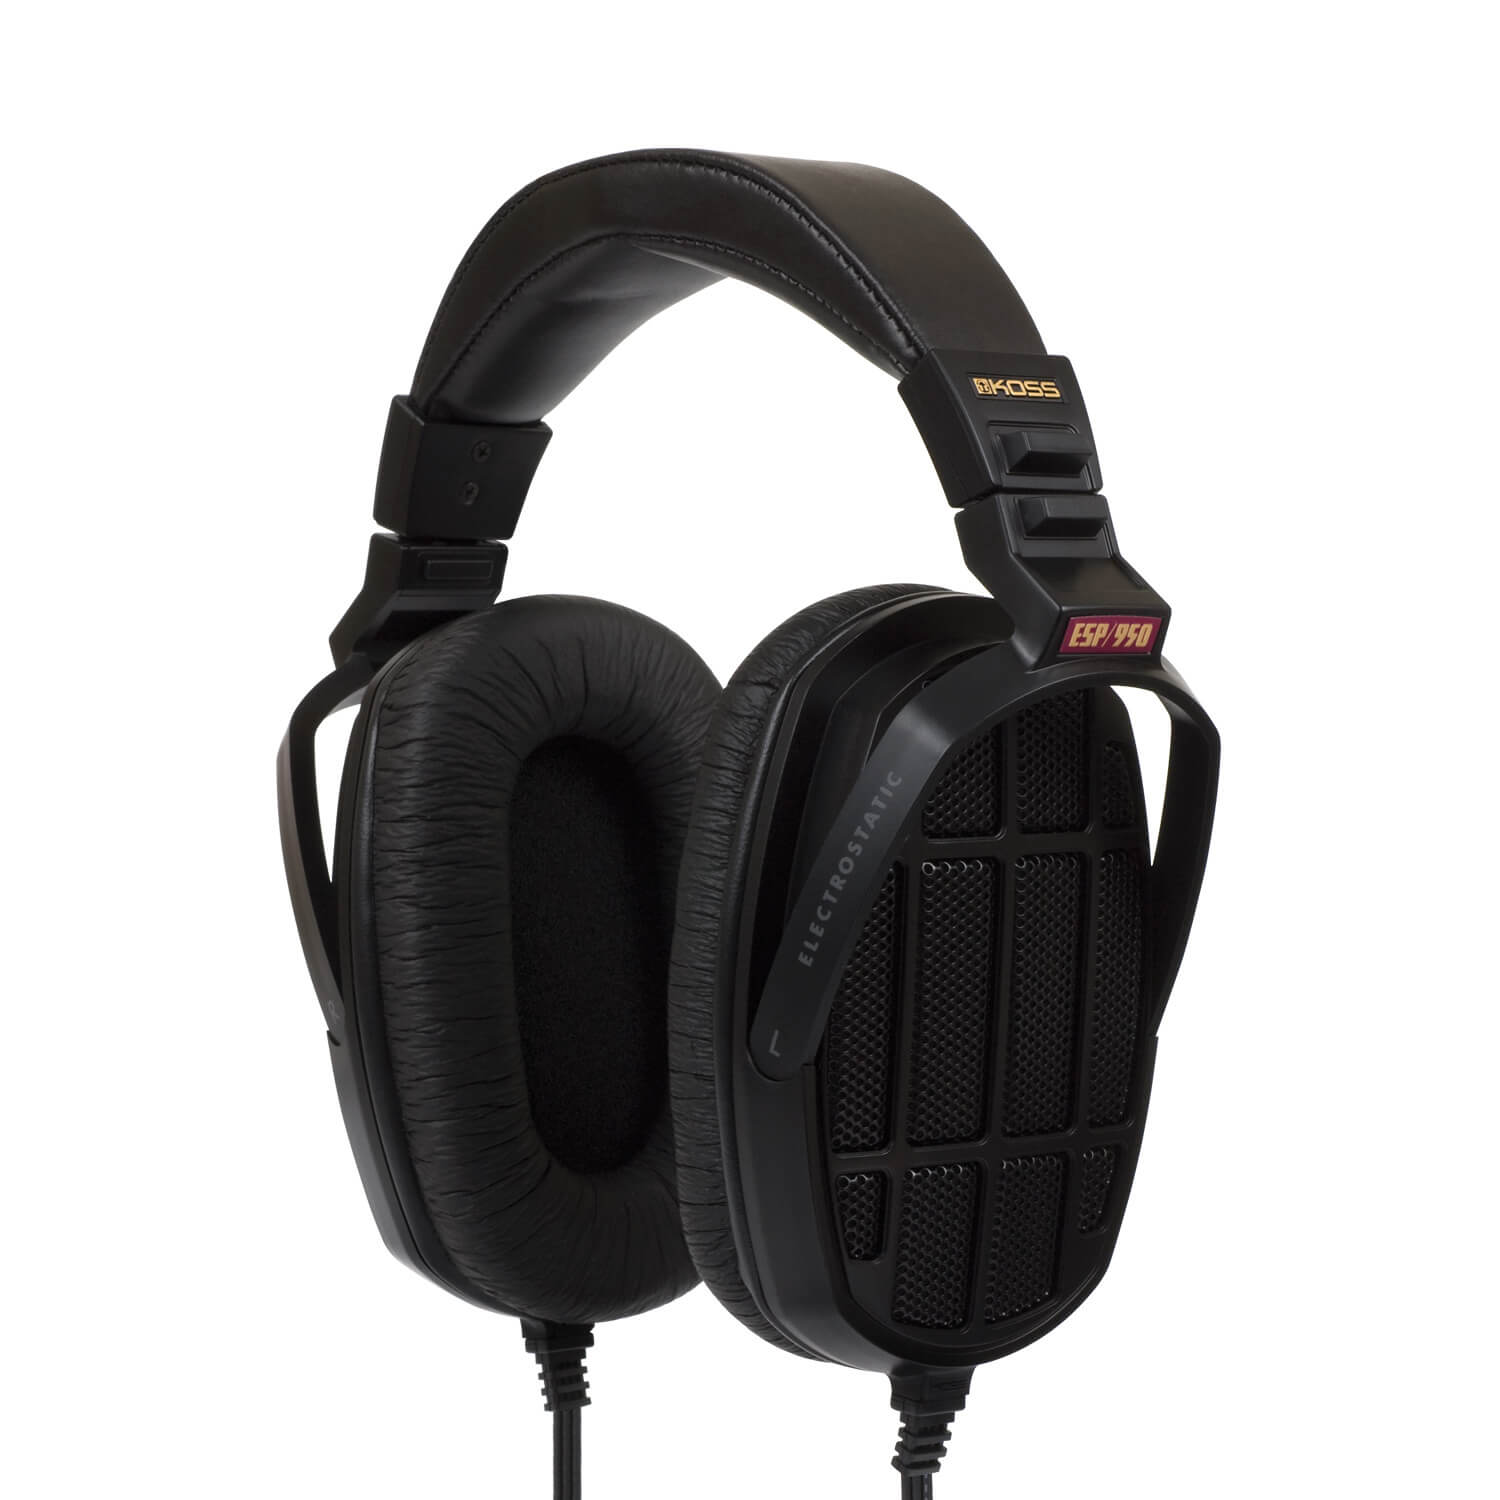 Headphone ESP950 Over-Ear Black